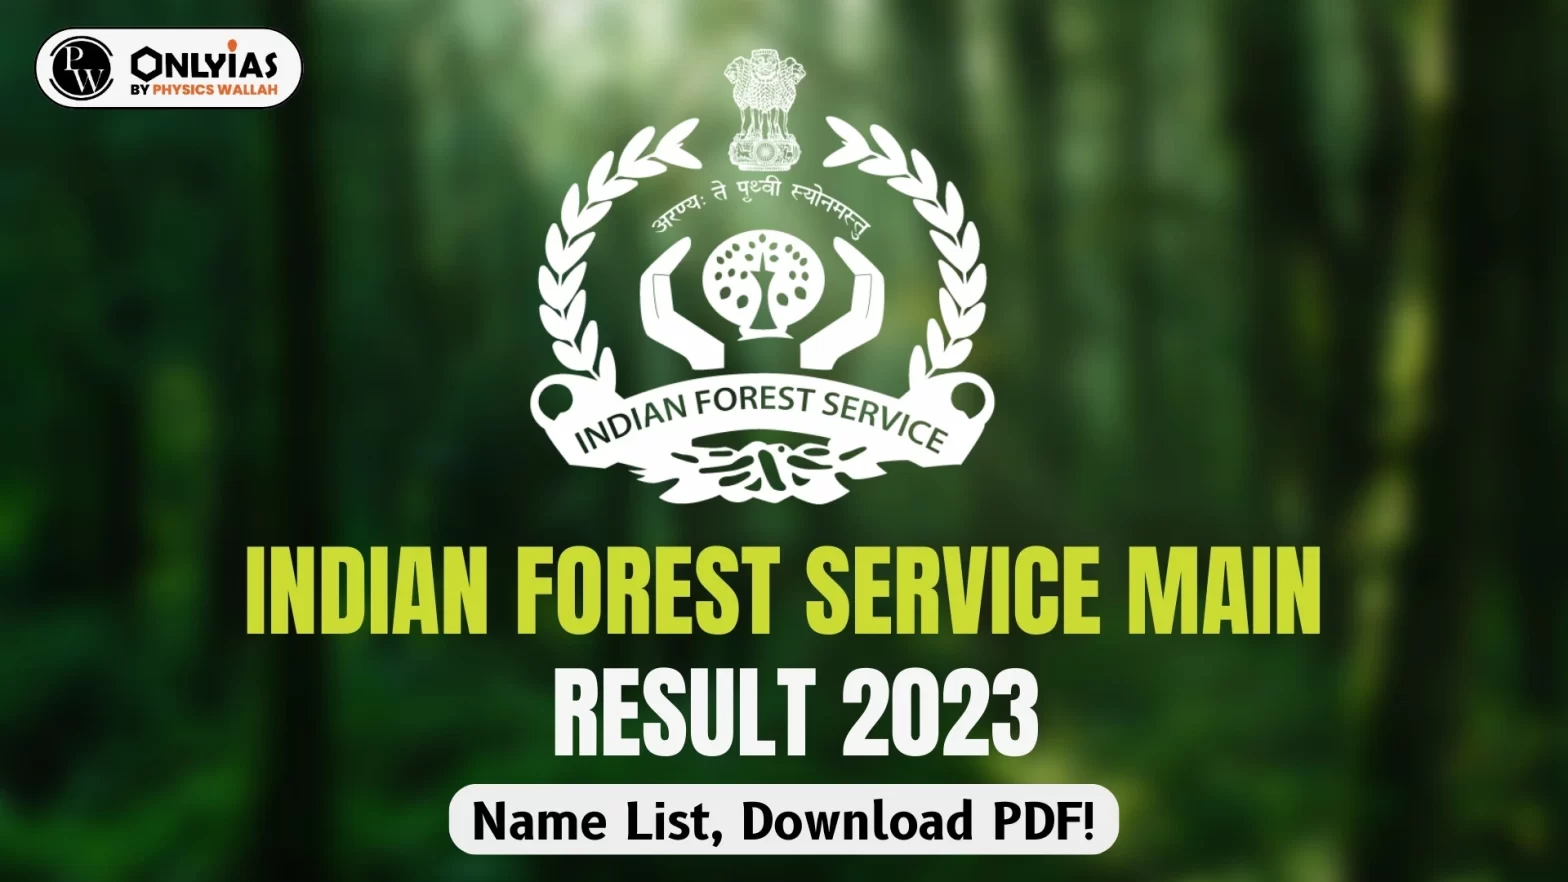 Indian Forest Service Main Result 2023: Name List, Download PDF!